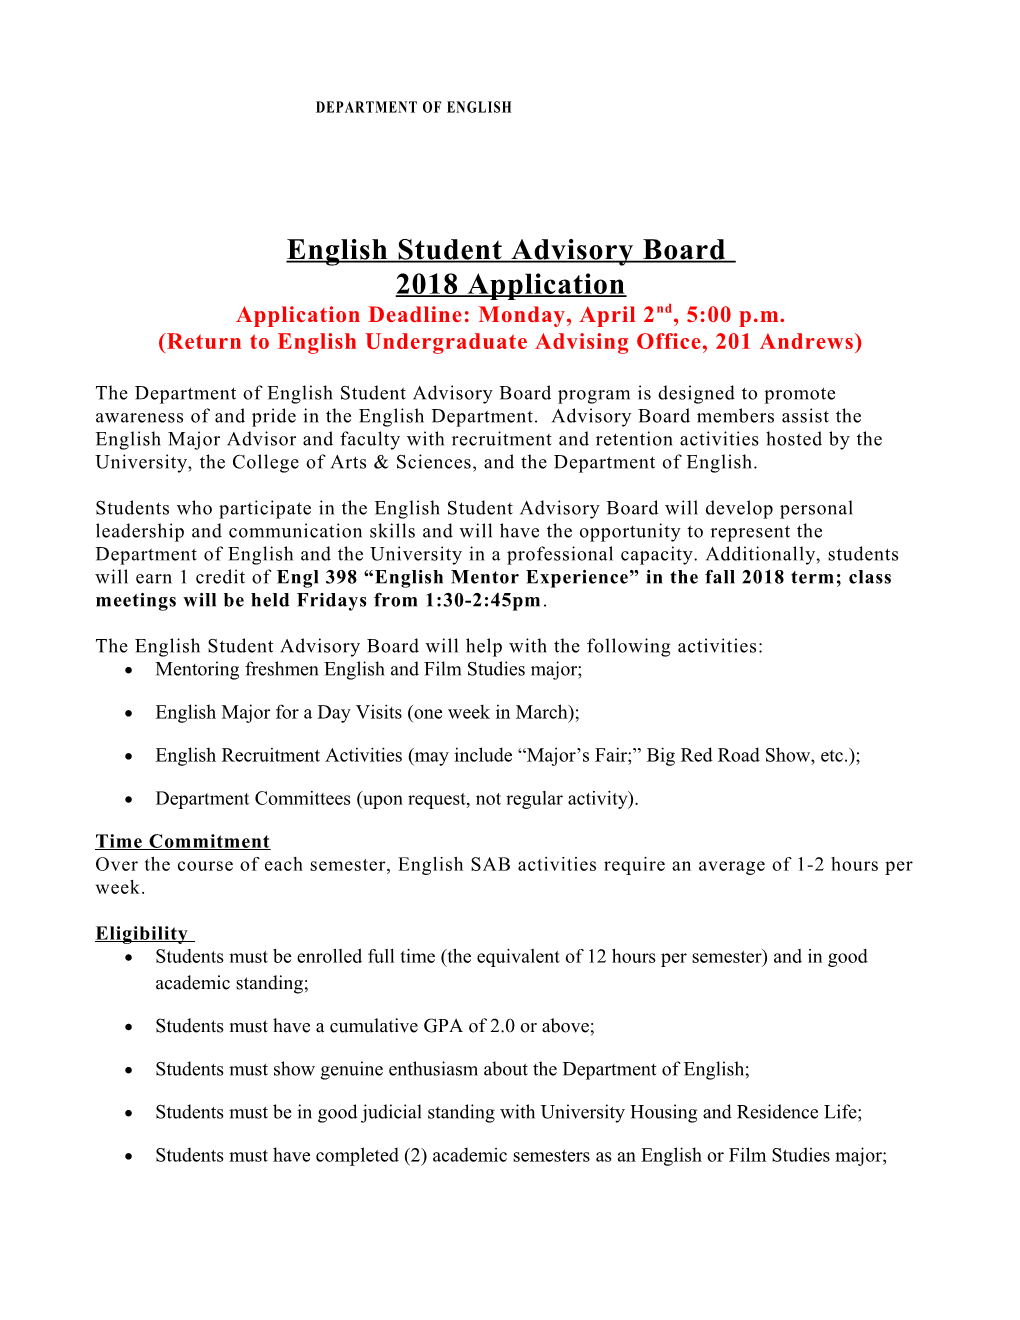 English Student Advisory Board